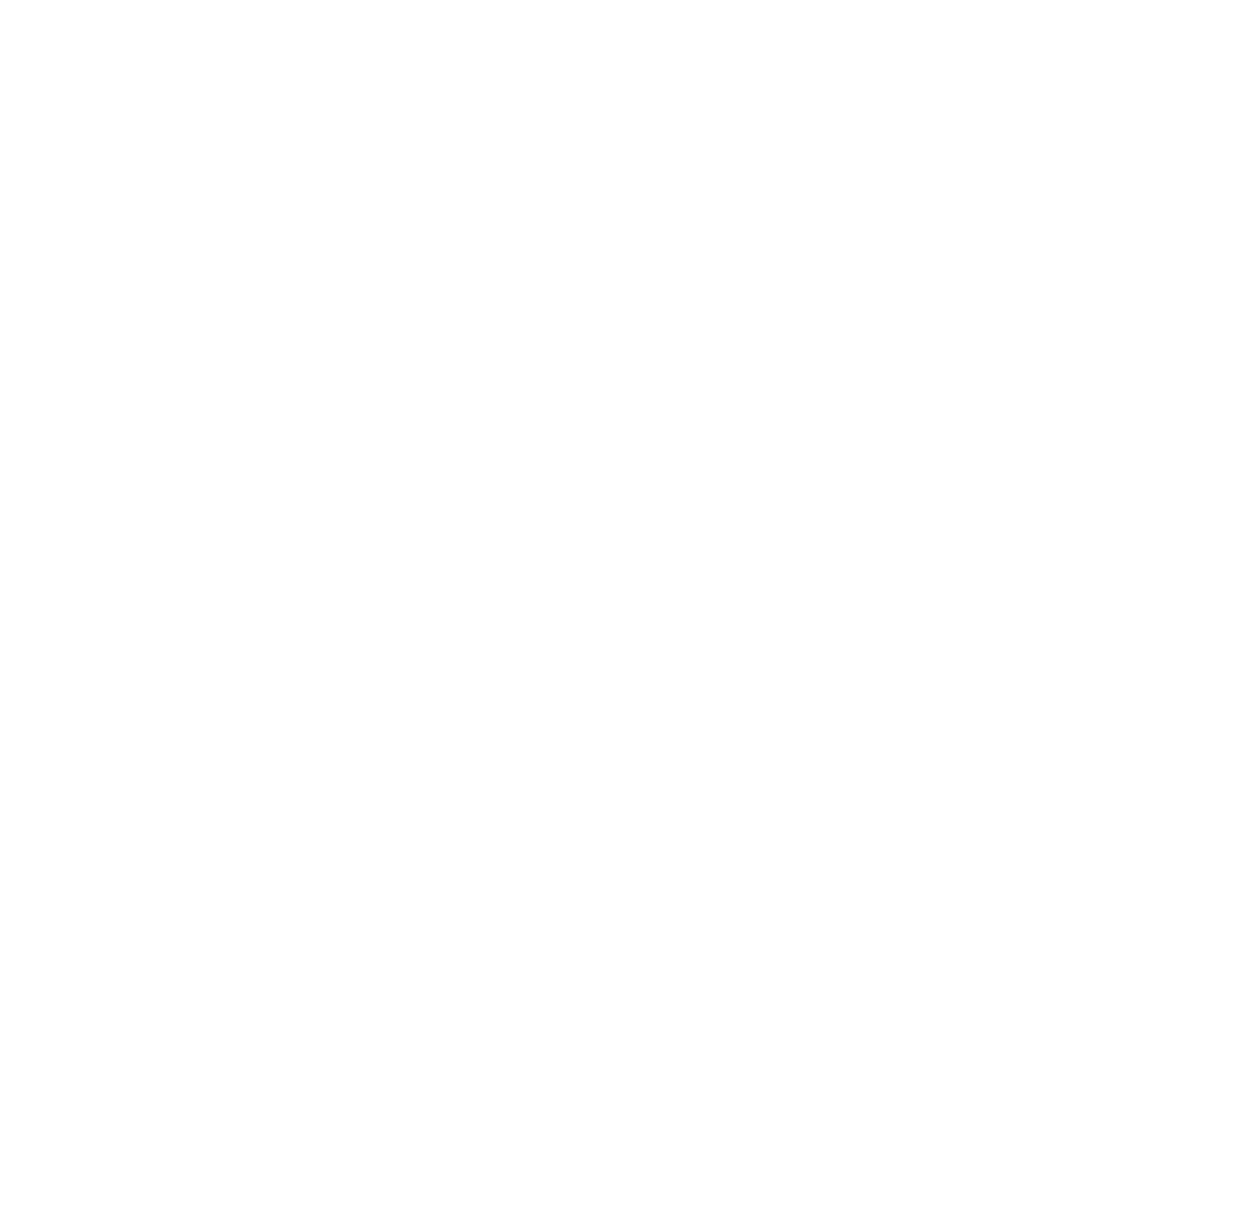 The Woolmark Company logo